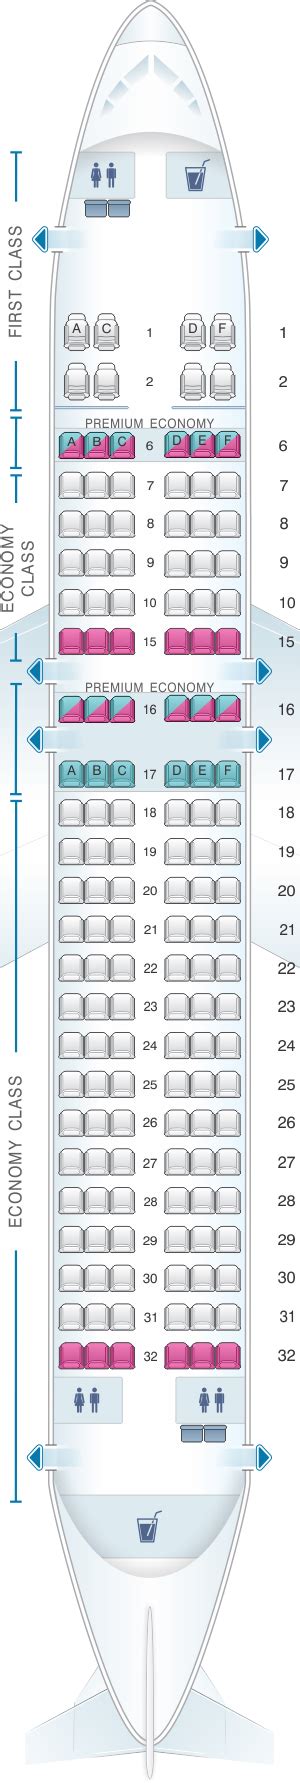 Airbus A320 Seat Map Alaska